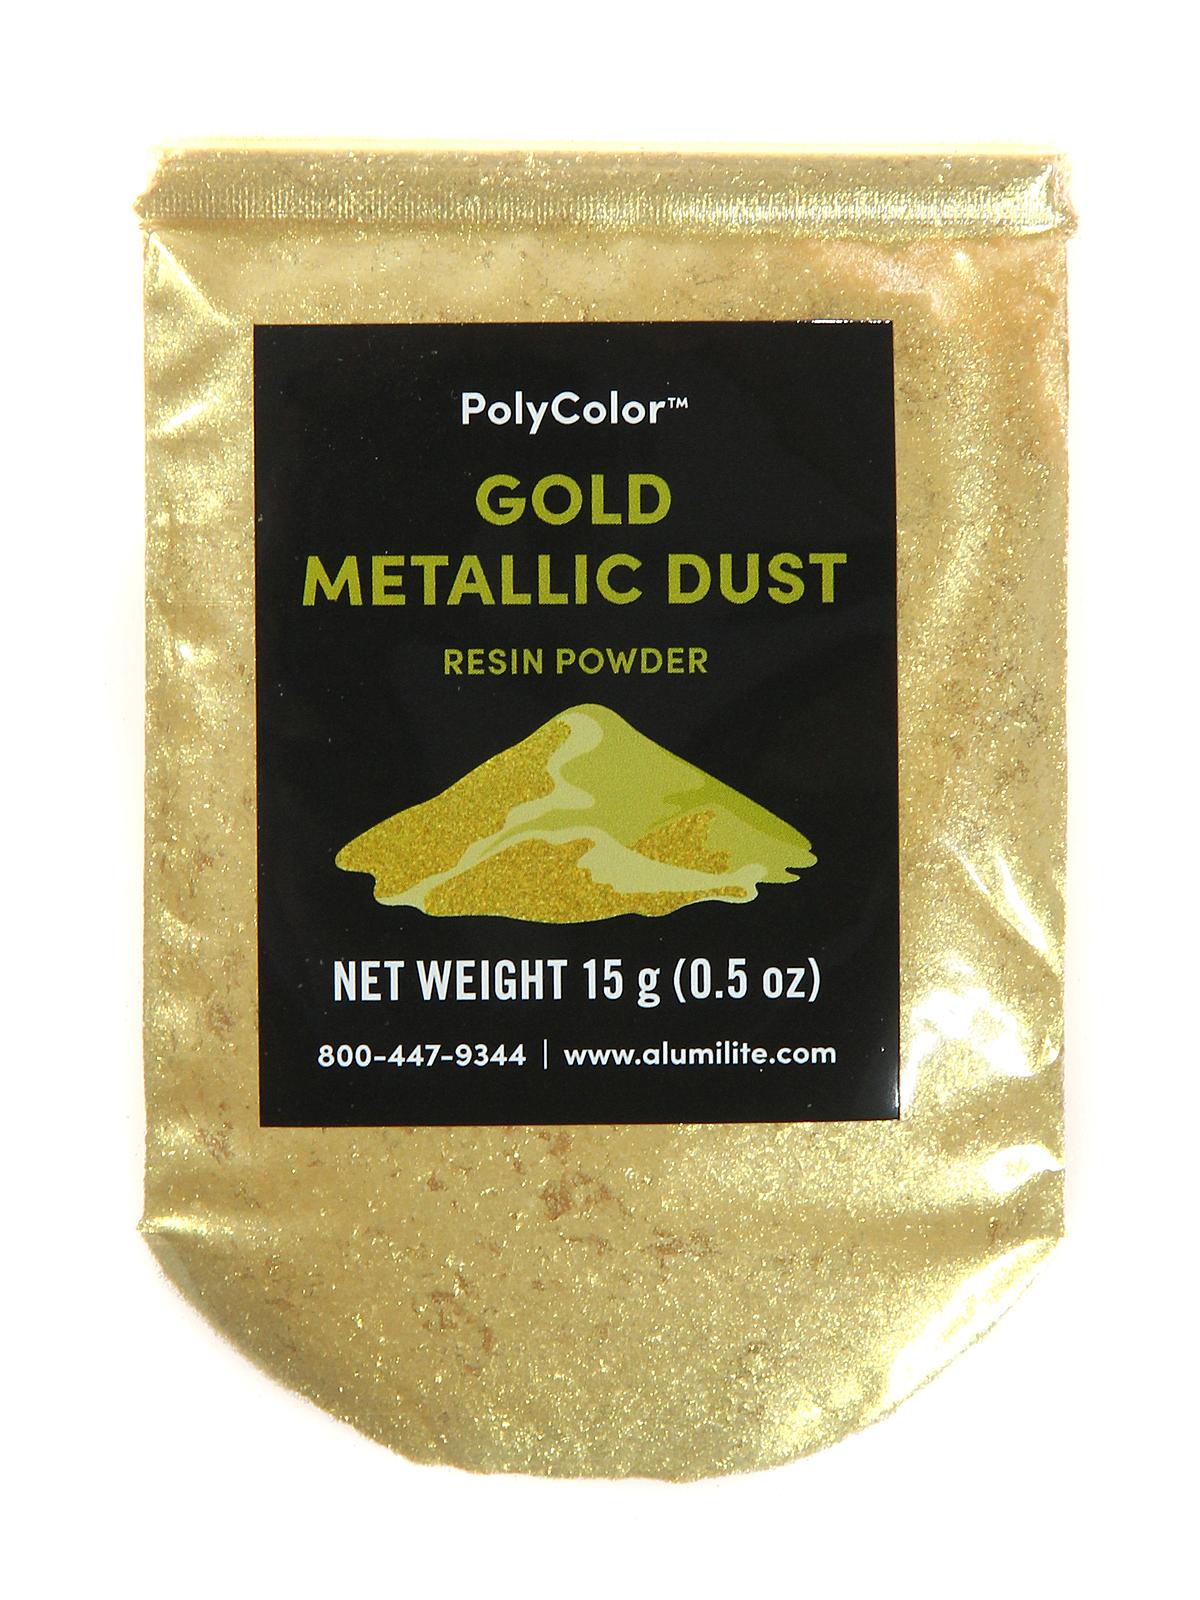 PolyColor Resin Powder Gold Metallic Dust Bag 15 G (0.5 Oz.)